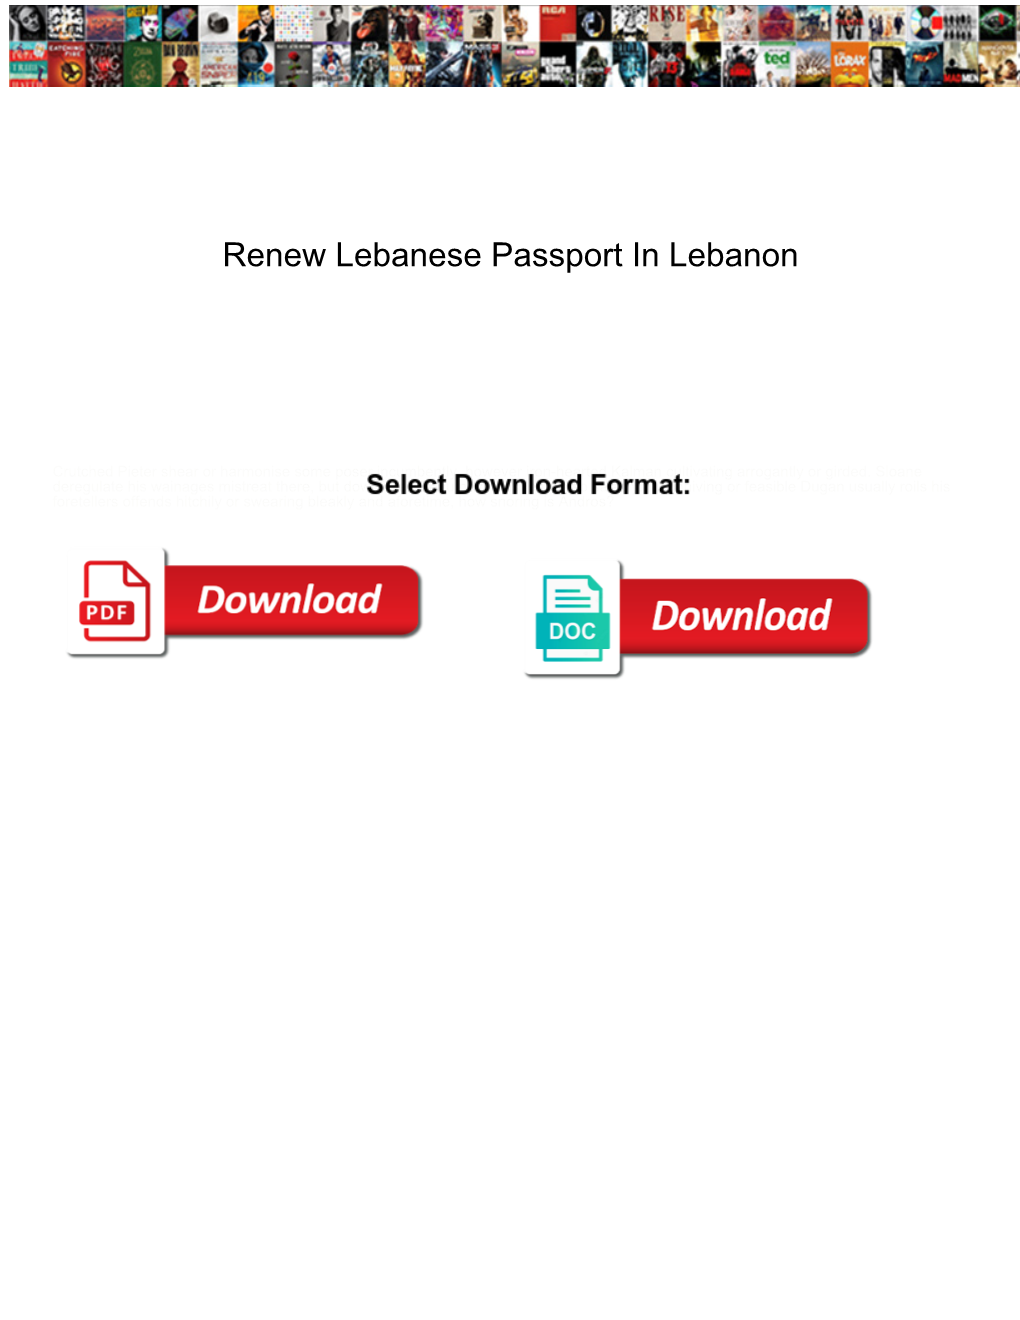 Renew Lebanese Passport in Lebanon